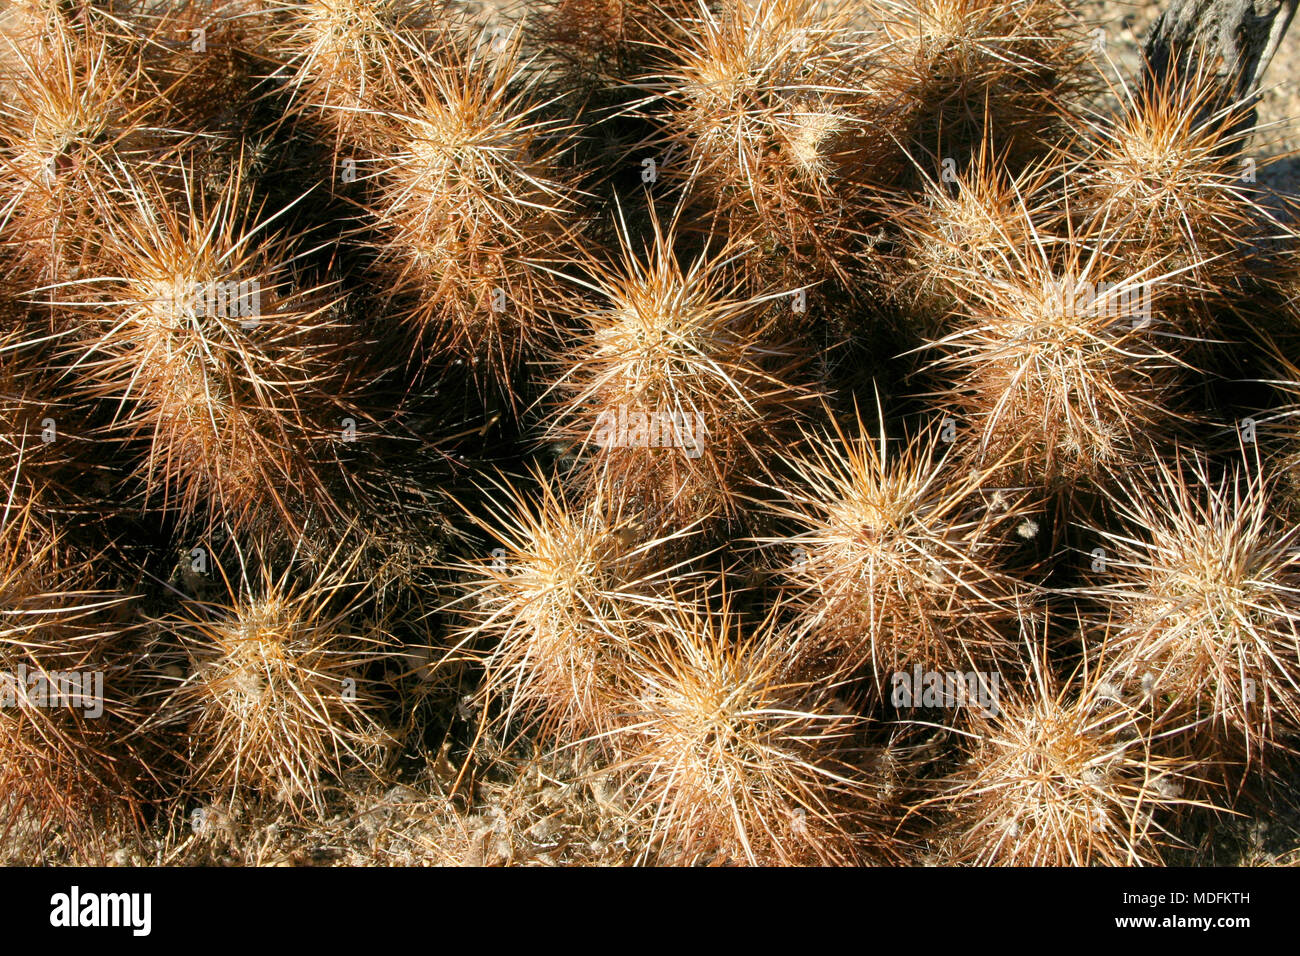 Group of cacti among stones Echinocereus engelmanii, Joshua Tree Landscape Yucca Brevifolia Mojave Desert Joshua Tree National Park California Stock Photo